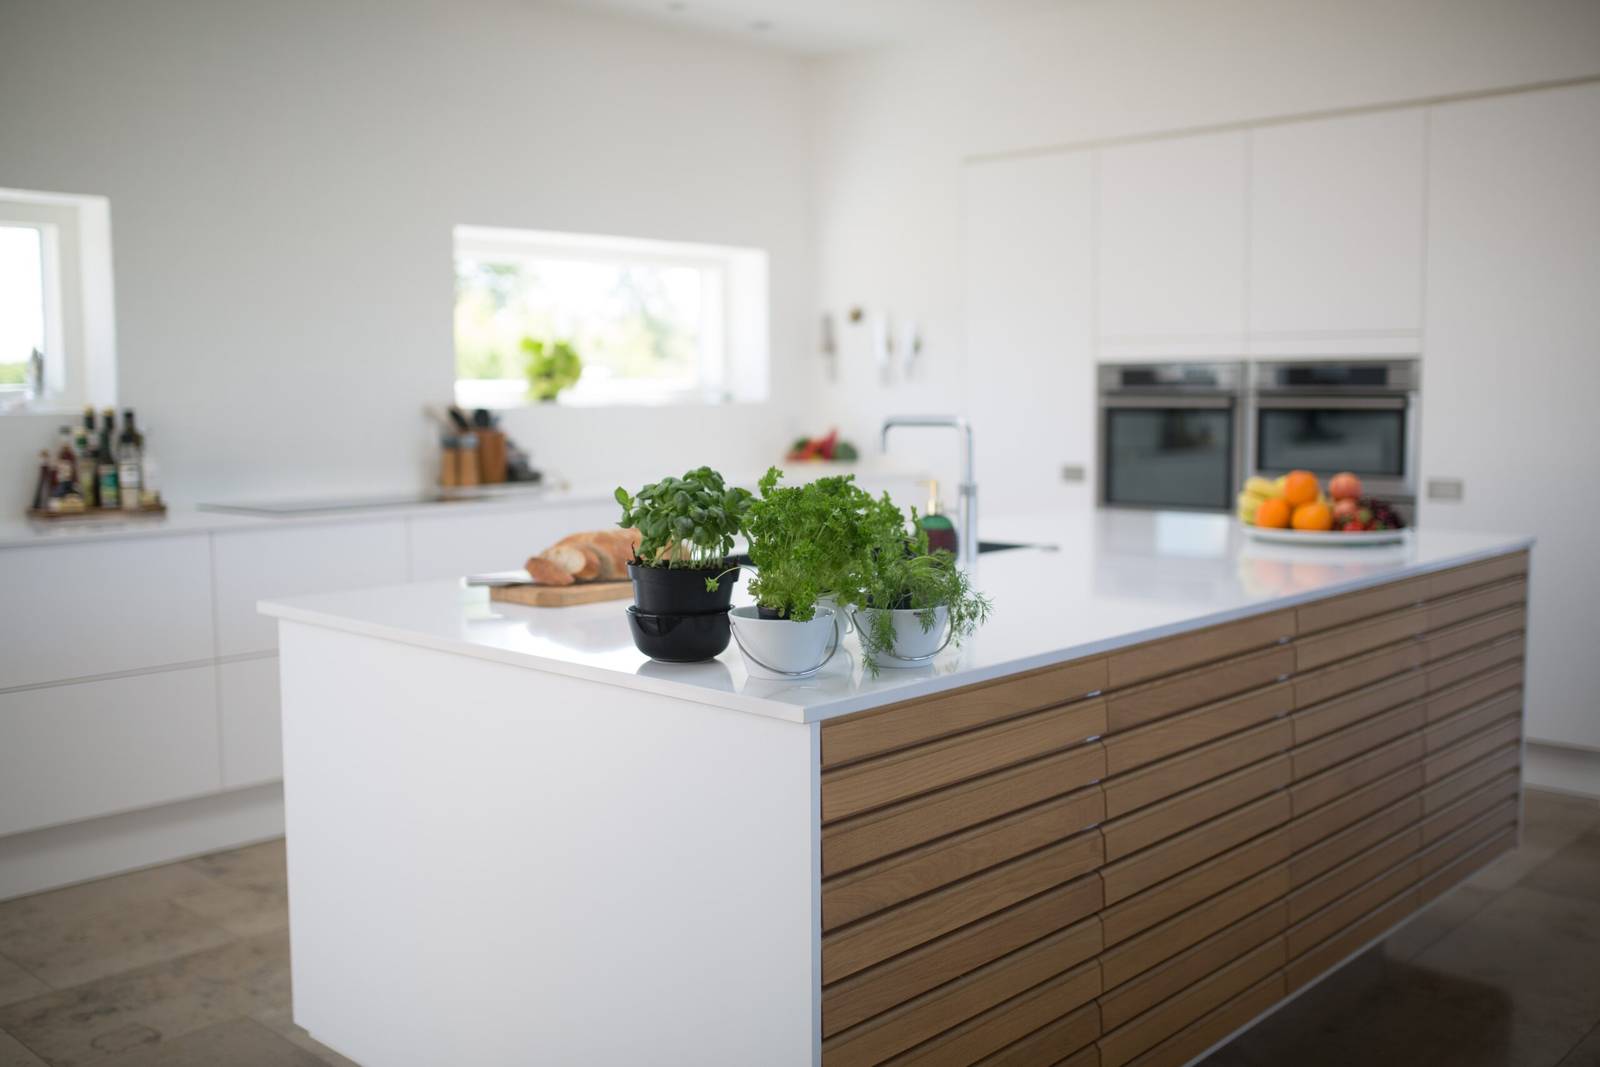 10 amazing tips for kitchen renovation